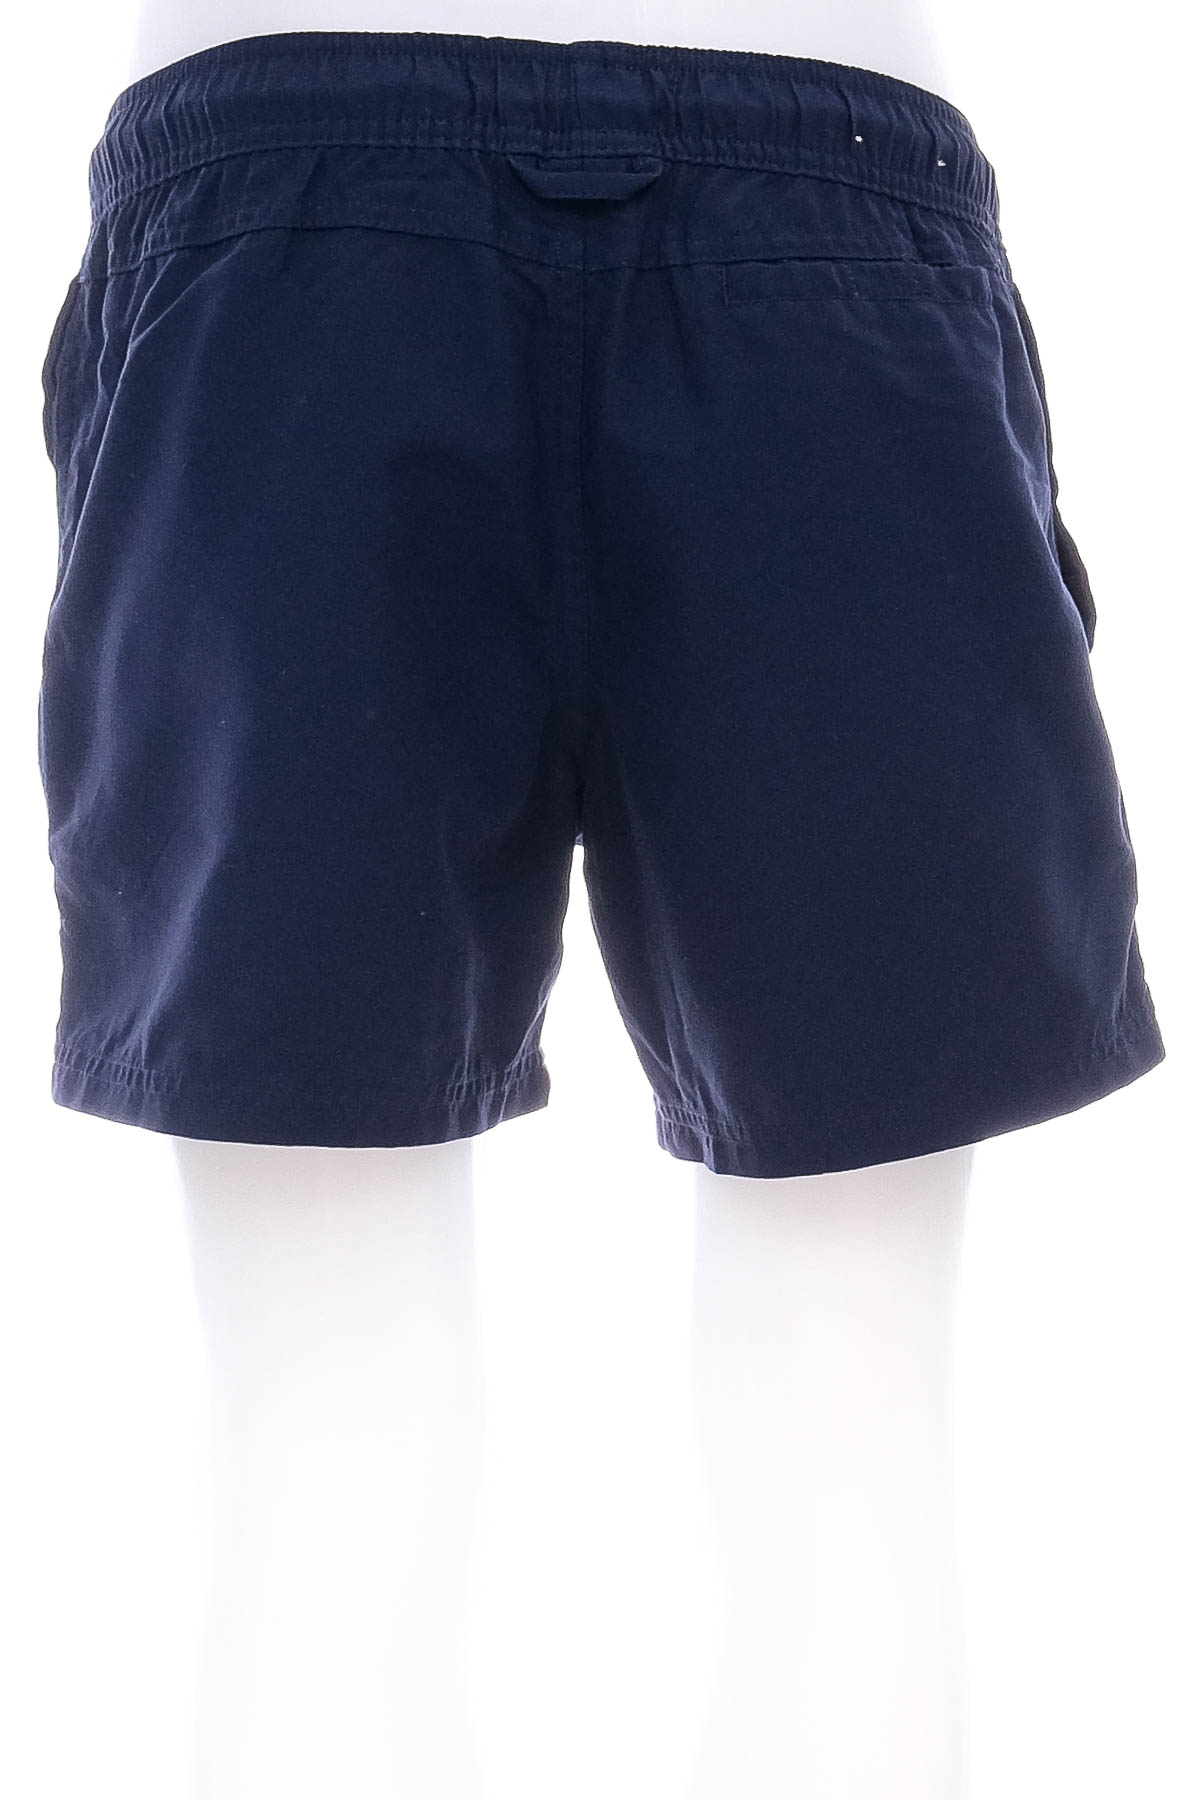 Men's shorts - Cotton On Garments - 1